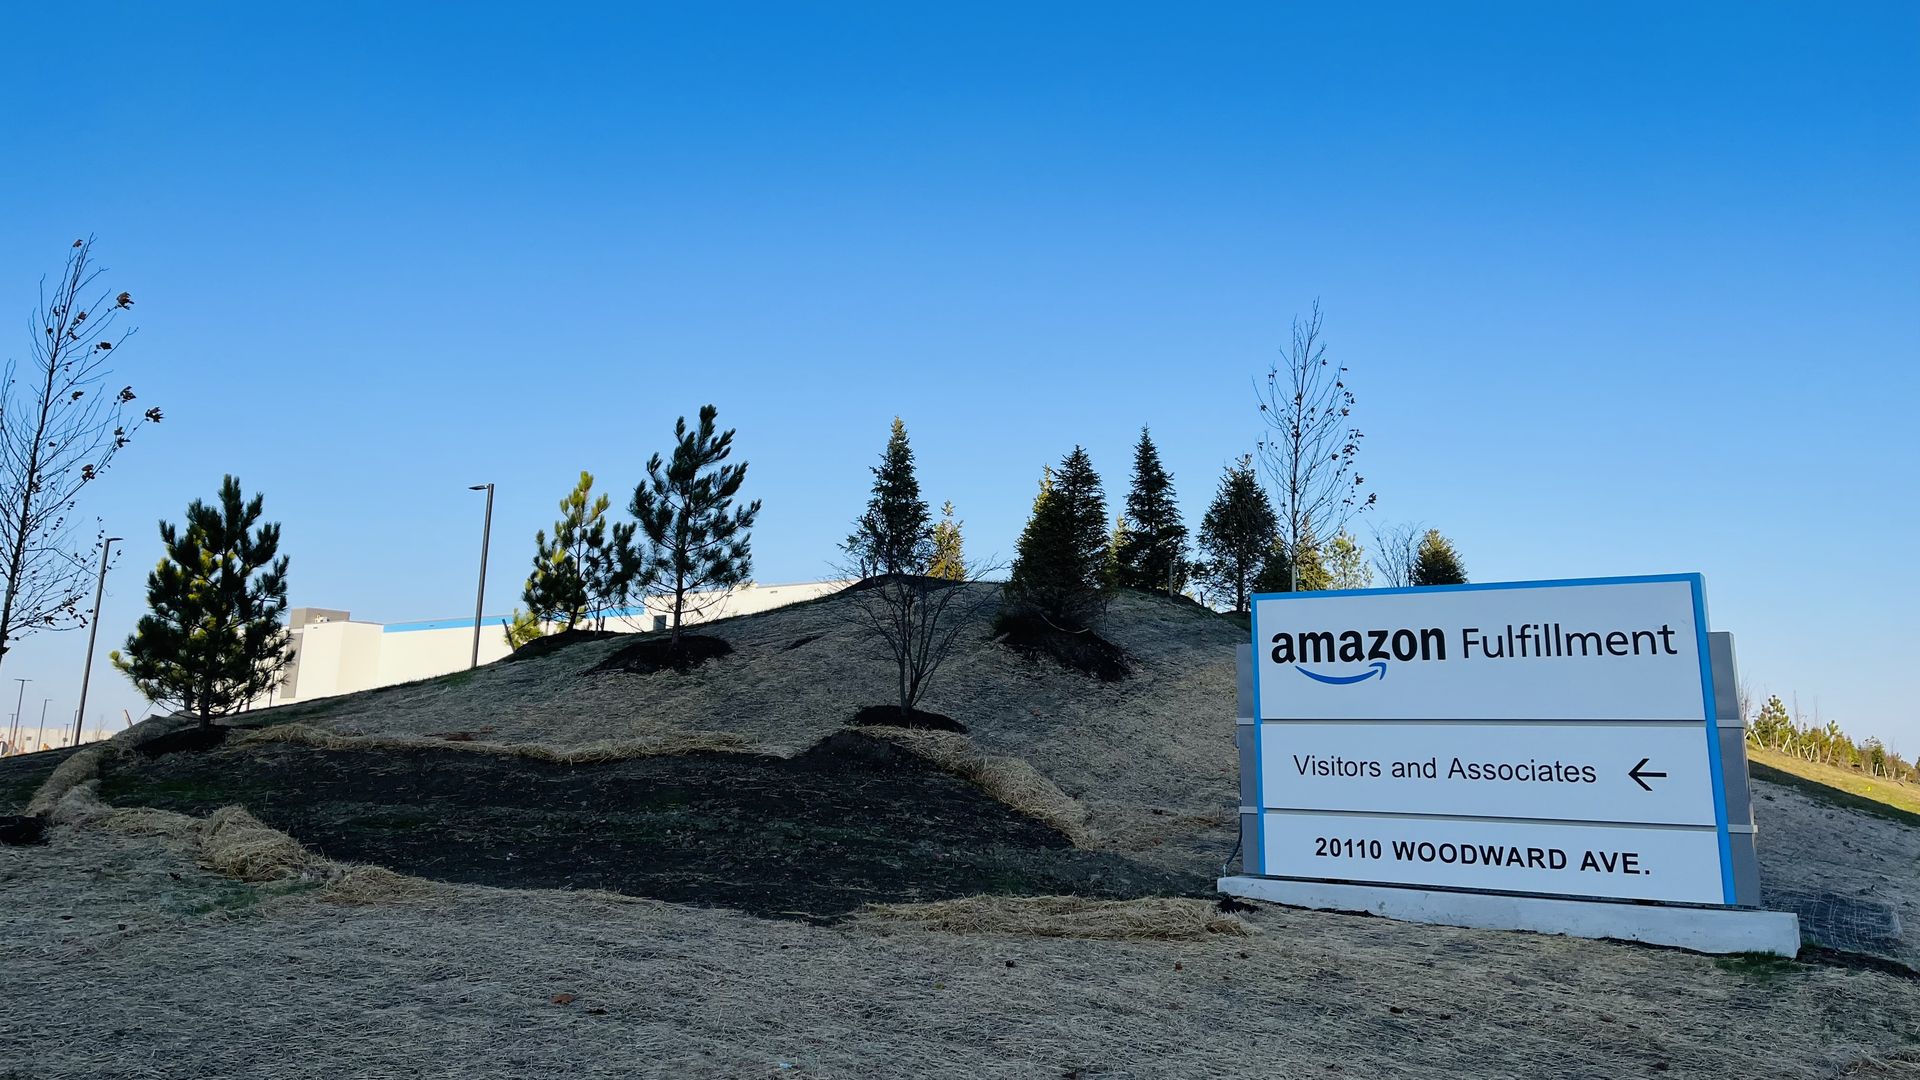 Amazon fulfillment center near Woodward and 8 Mile